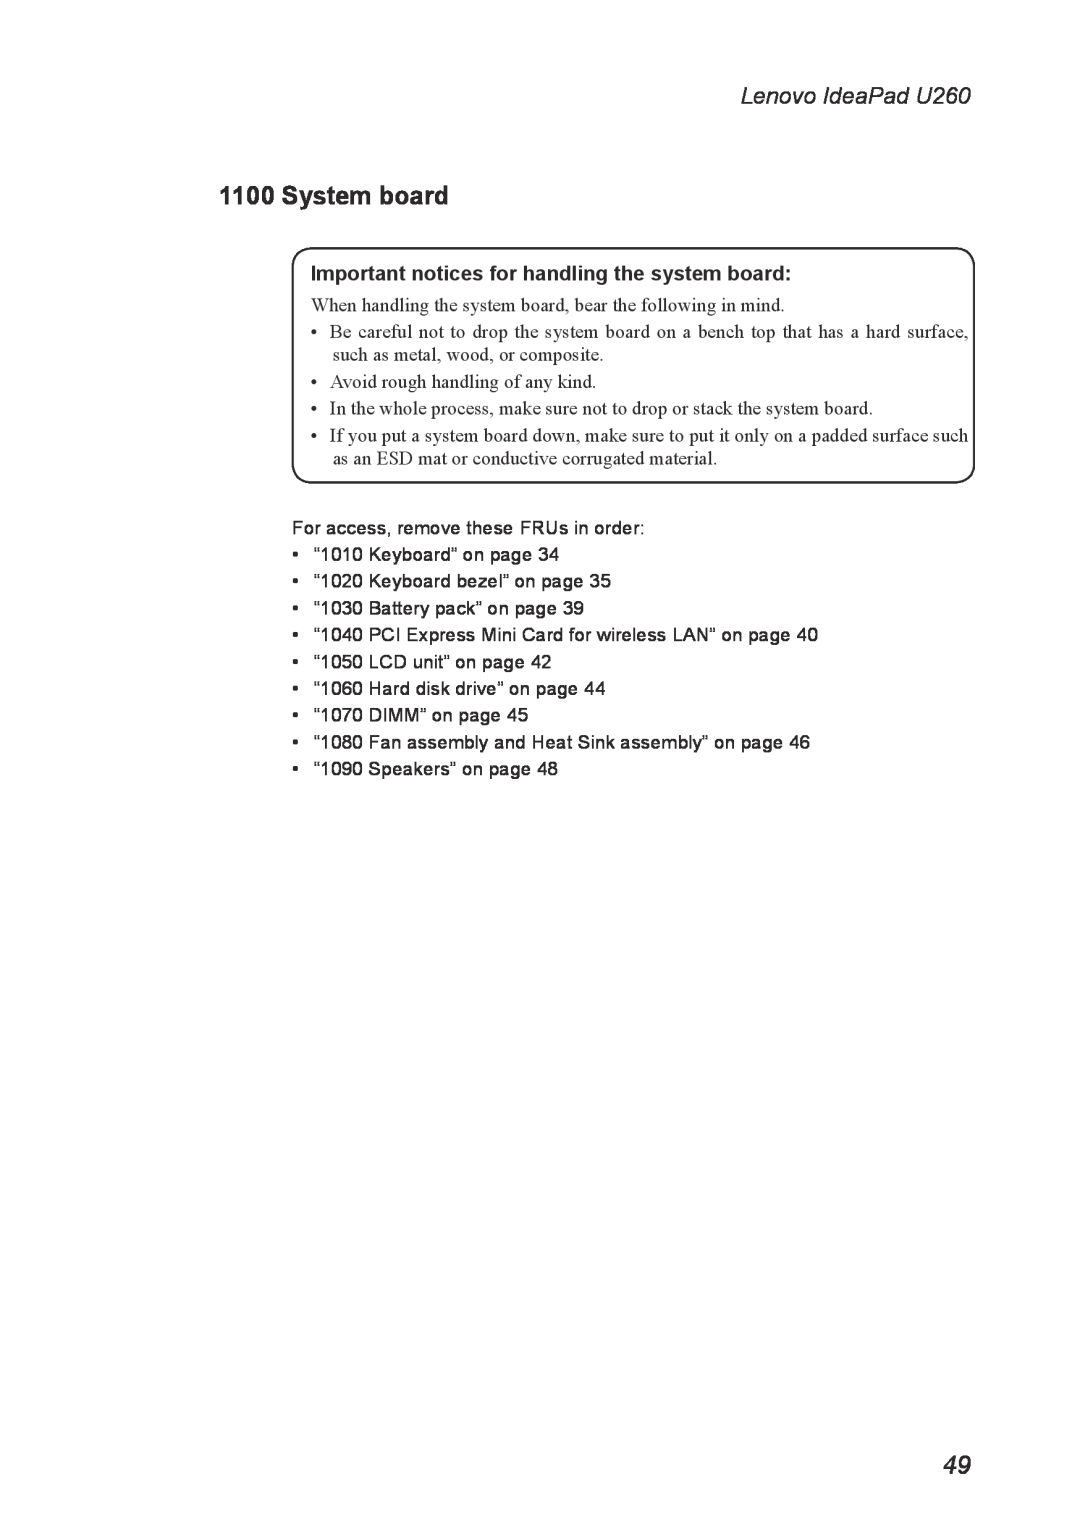 Lenovo manual System board, Important notices for handling the system board, Lenovo IdeaPad U260 